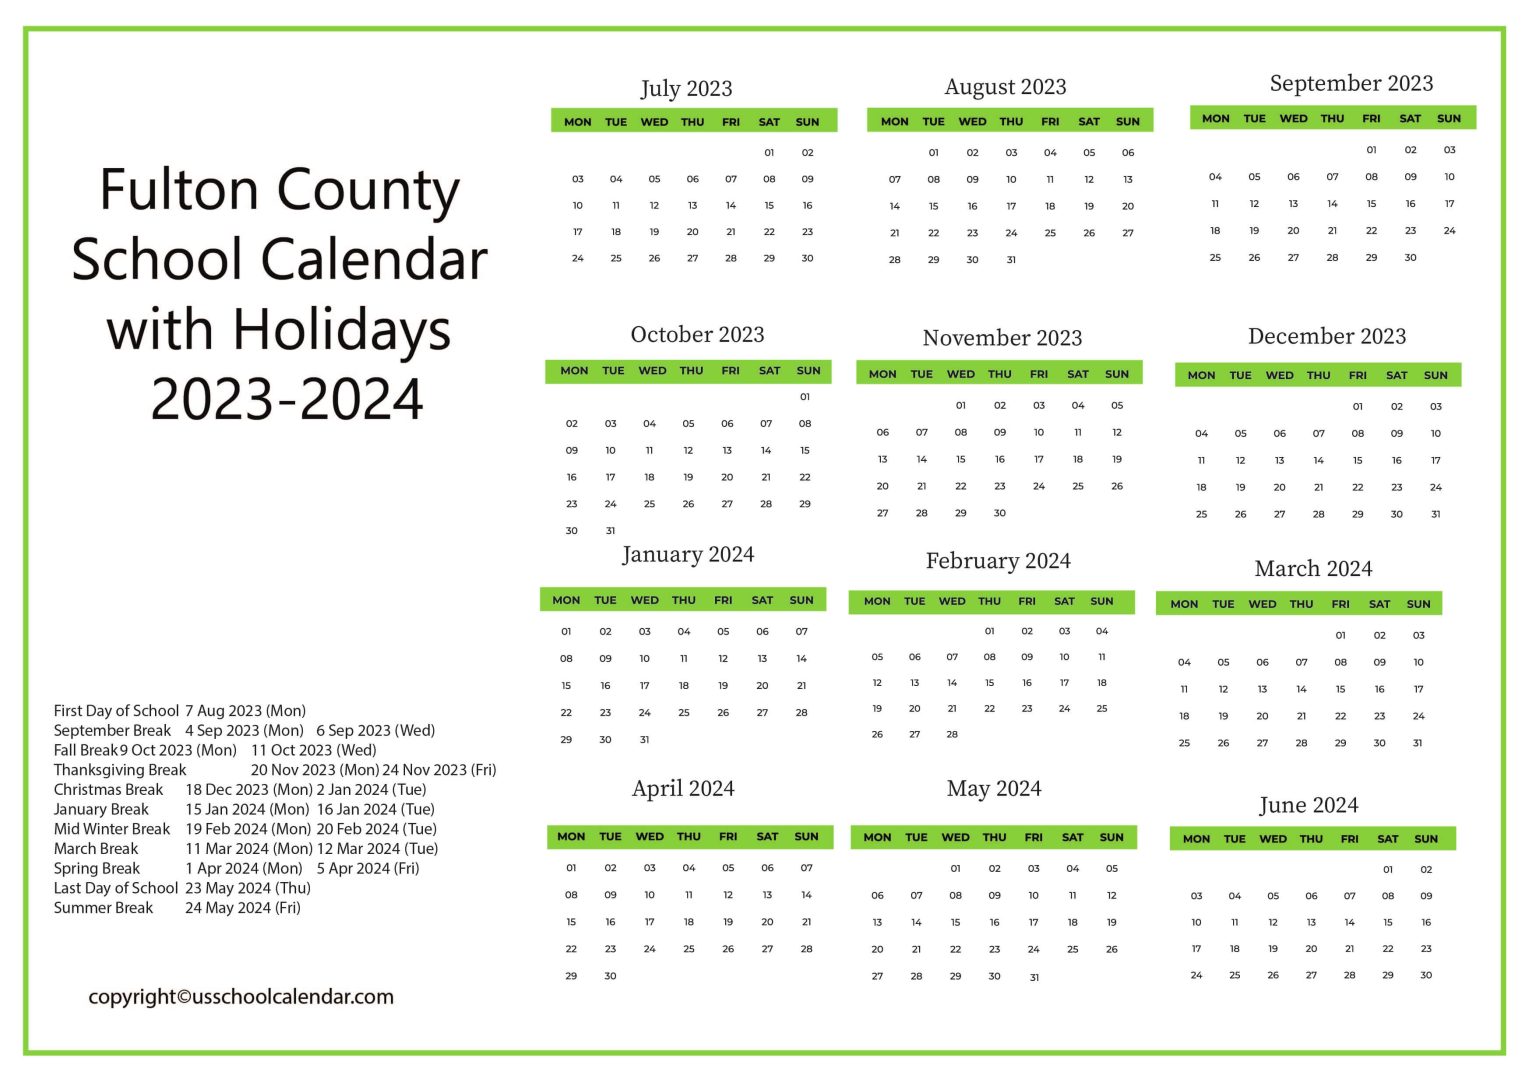 Fulton County School Calendar with Holidays 2023-2024